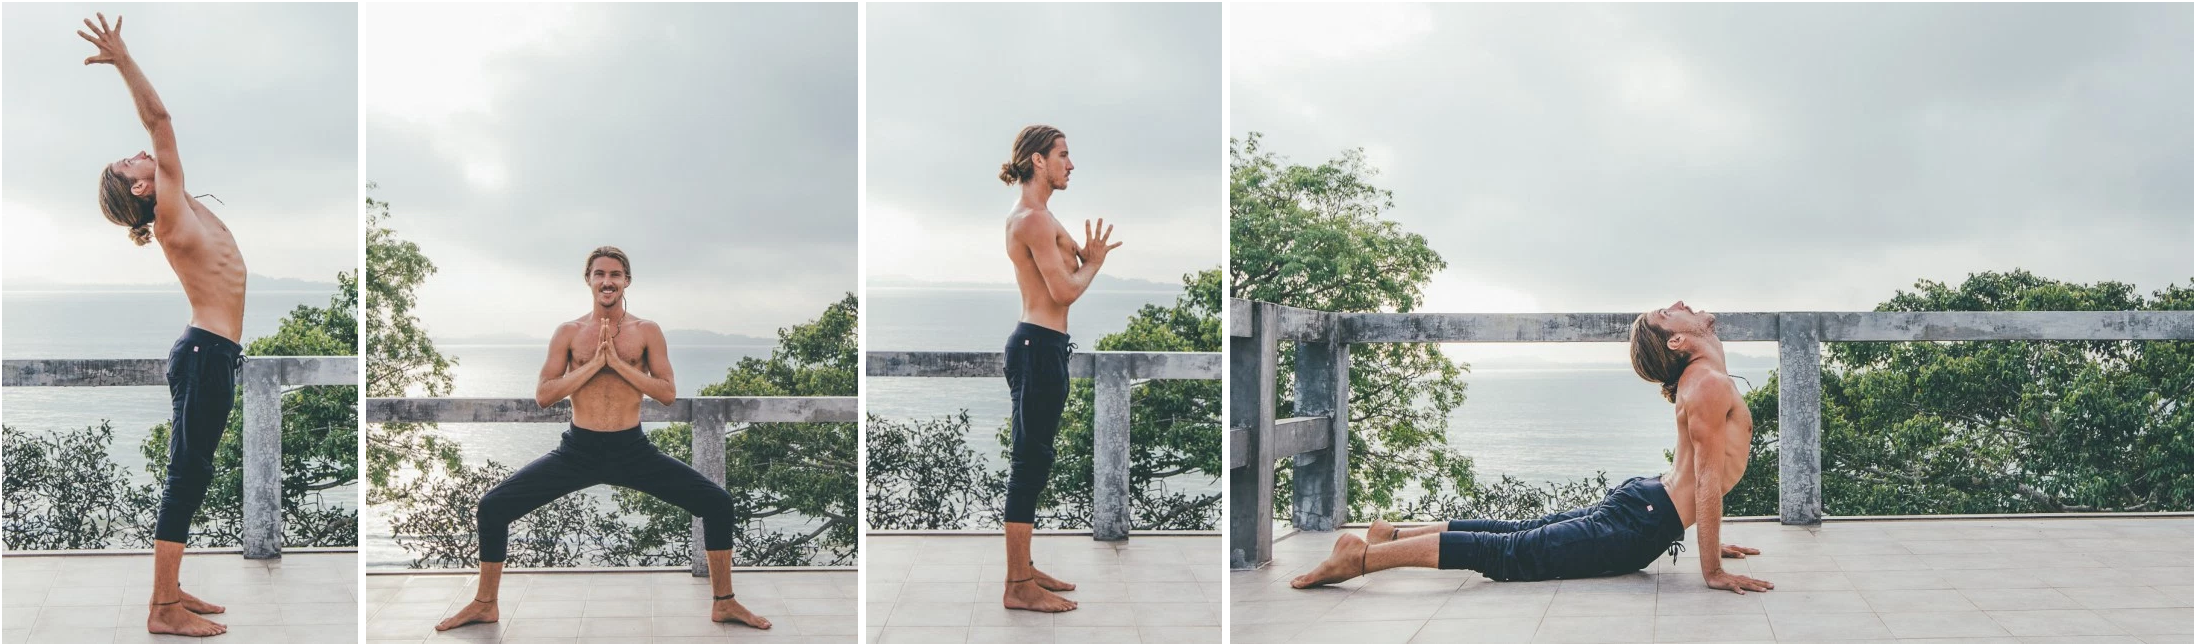 Nik Robson yoga poses